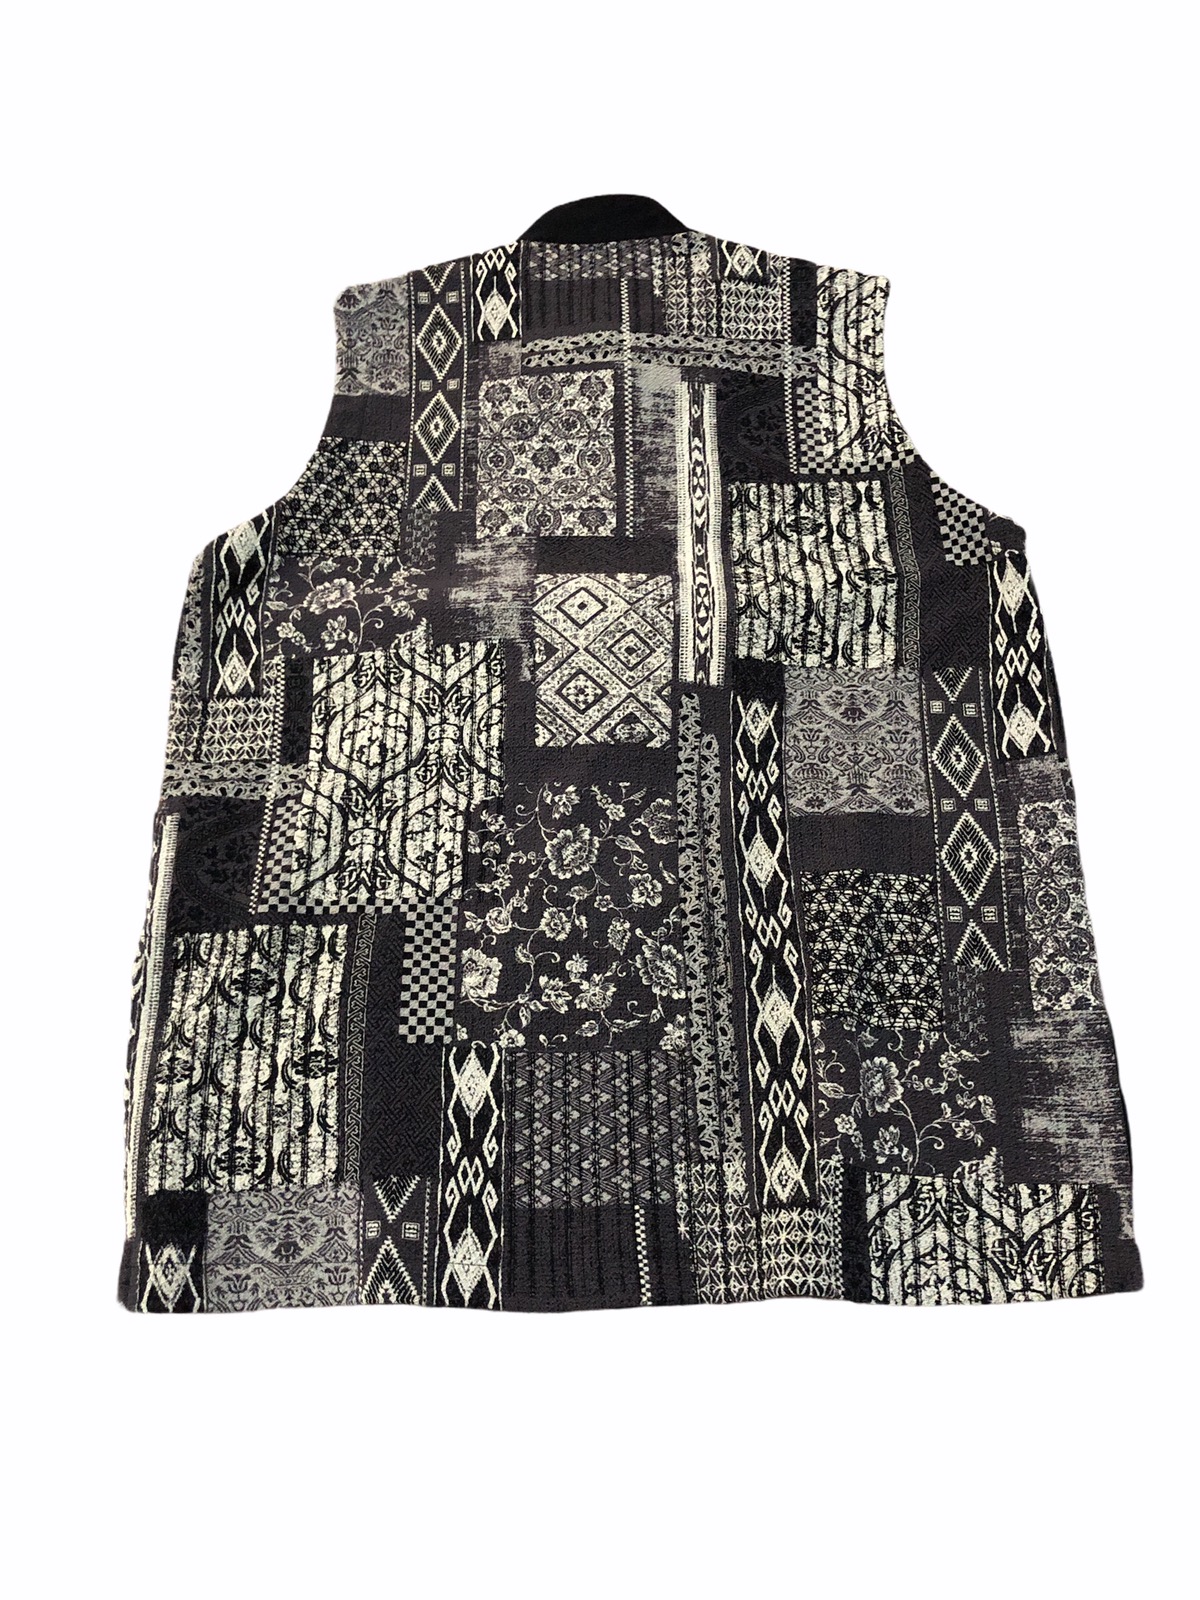 Japanese Brand - Japanese Traditional Vest Abstract Jacket Kapital Design - 2